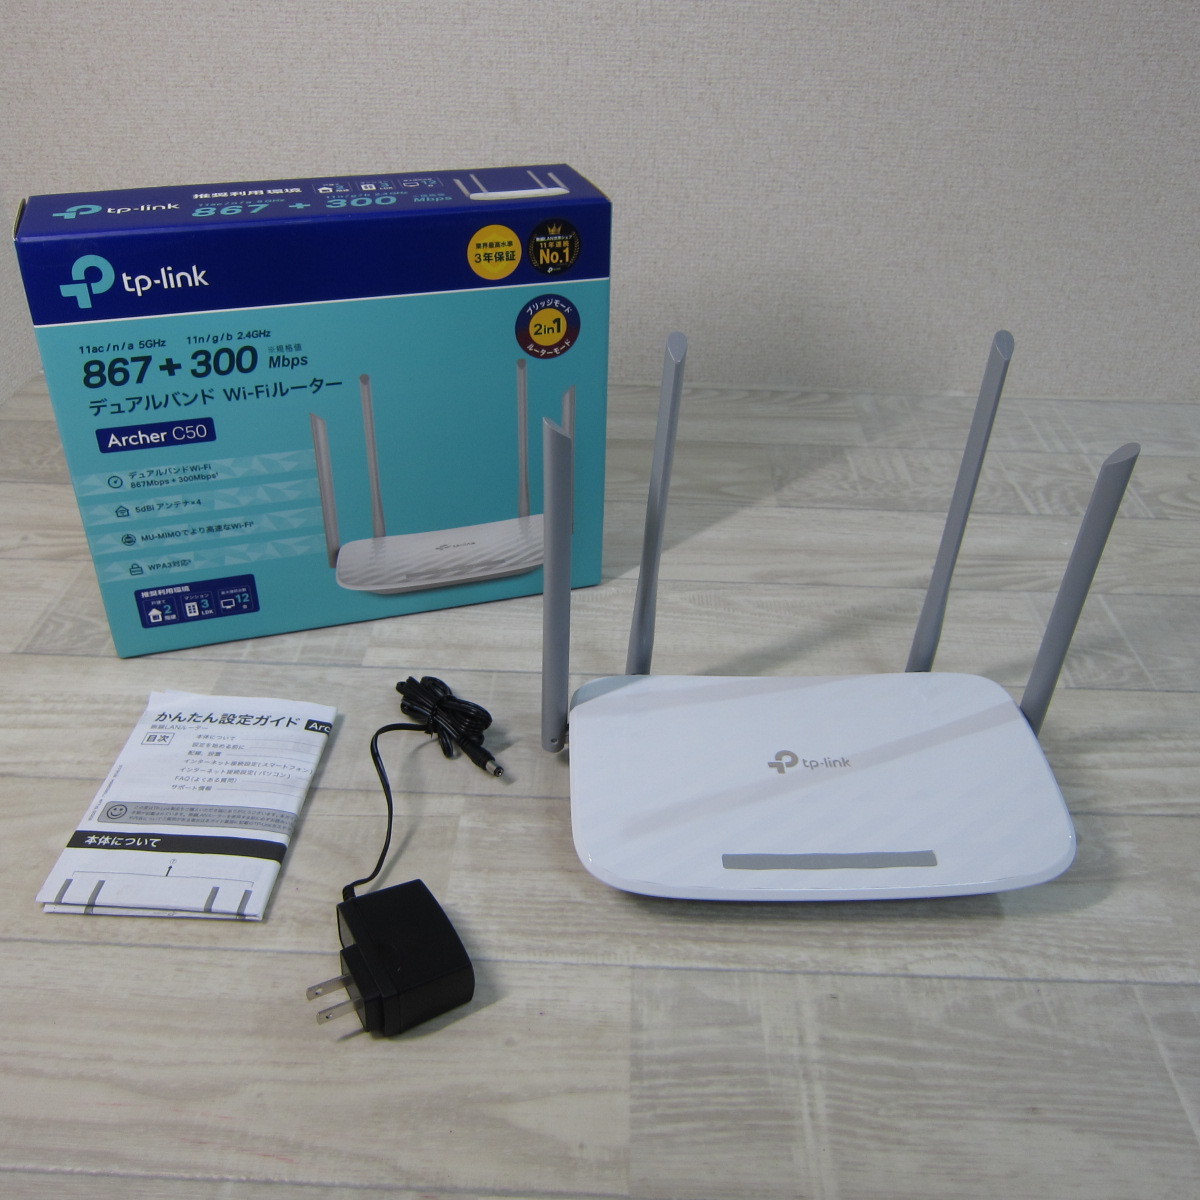 9272PA23【ほぼ未使用】TP-Link WiFi 無線LAN ルーター Archer C50 11ac AC1200 867 + 300Mbps デュアルバンド wi-fi/無線ルーター_画像1